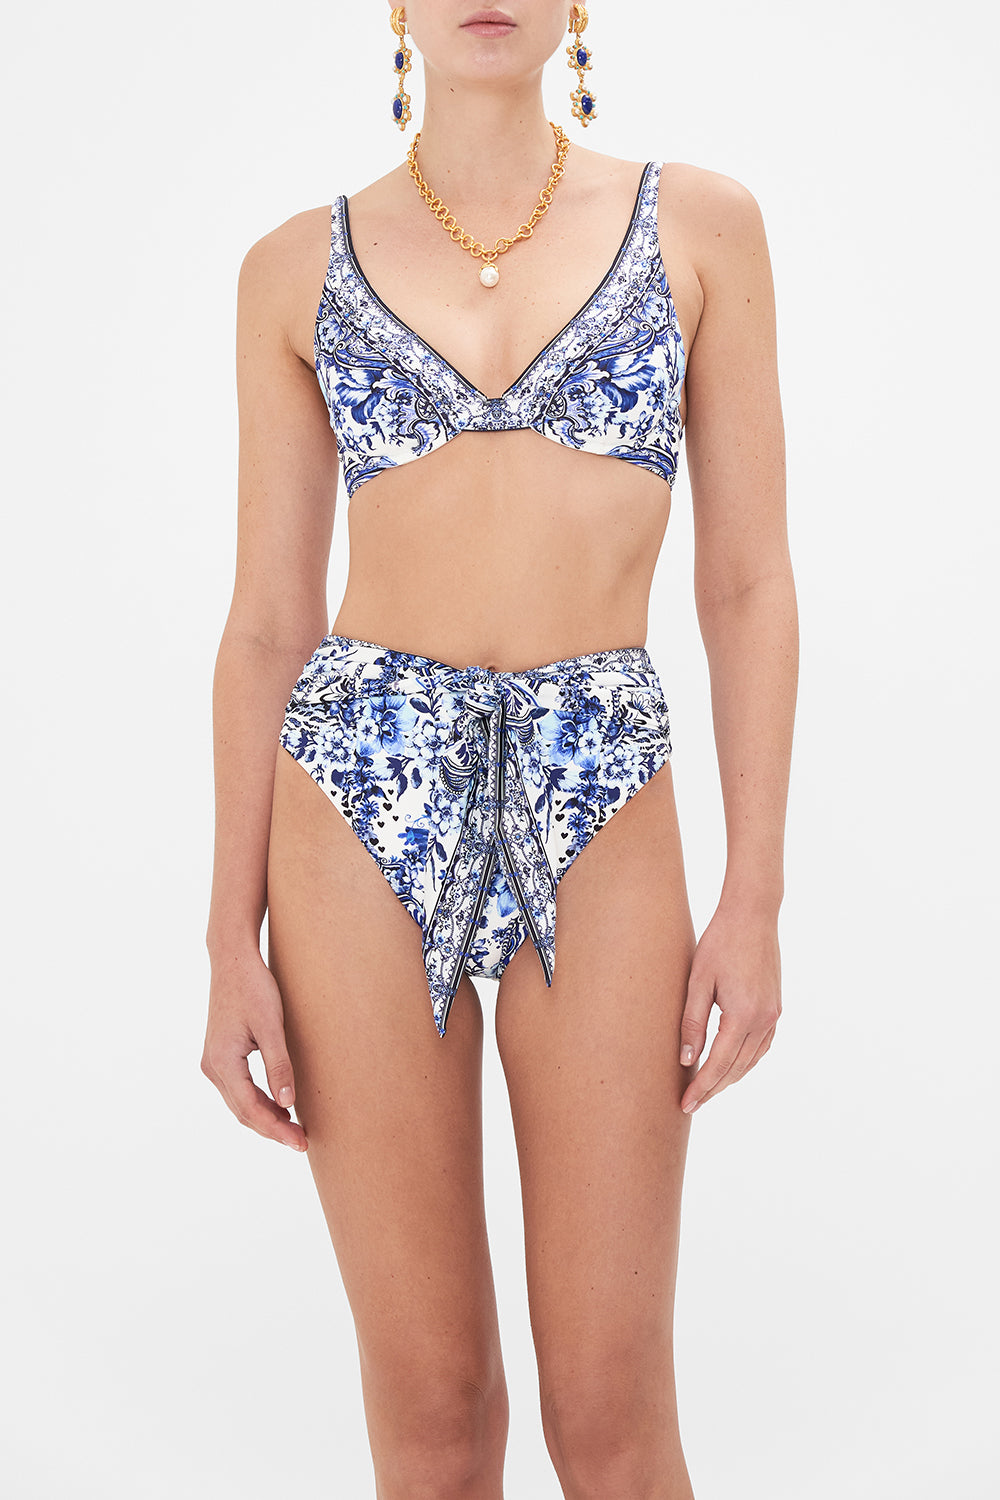 Crop view of model wearing CAMILLA womens underwire bikini top in Glaze and Graze print